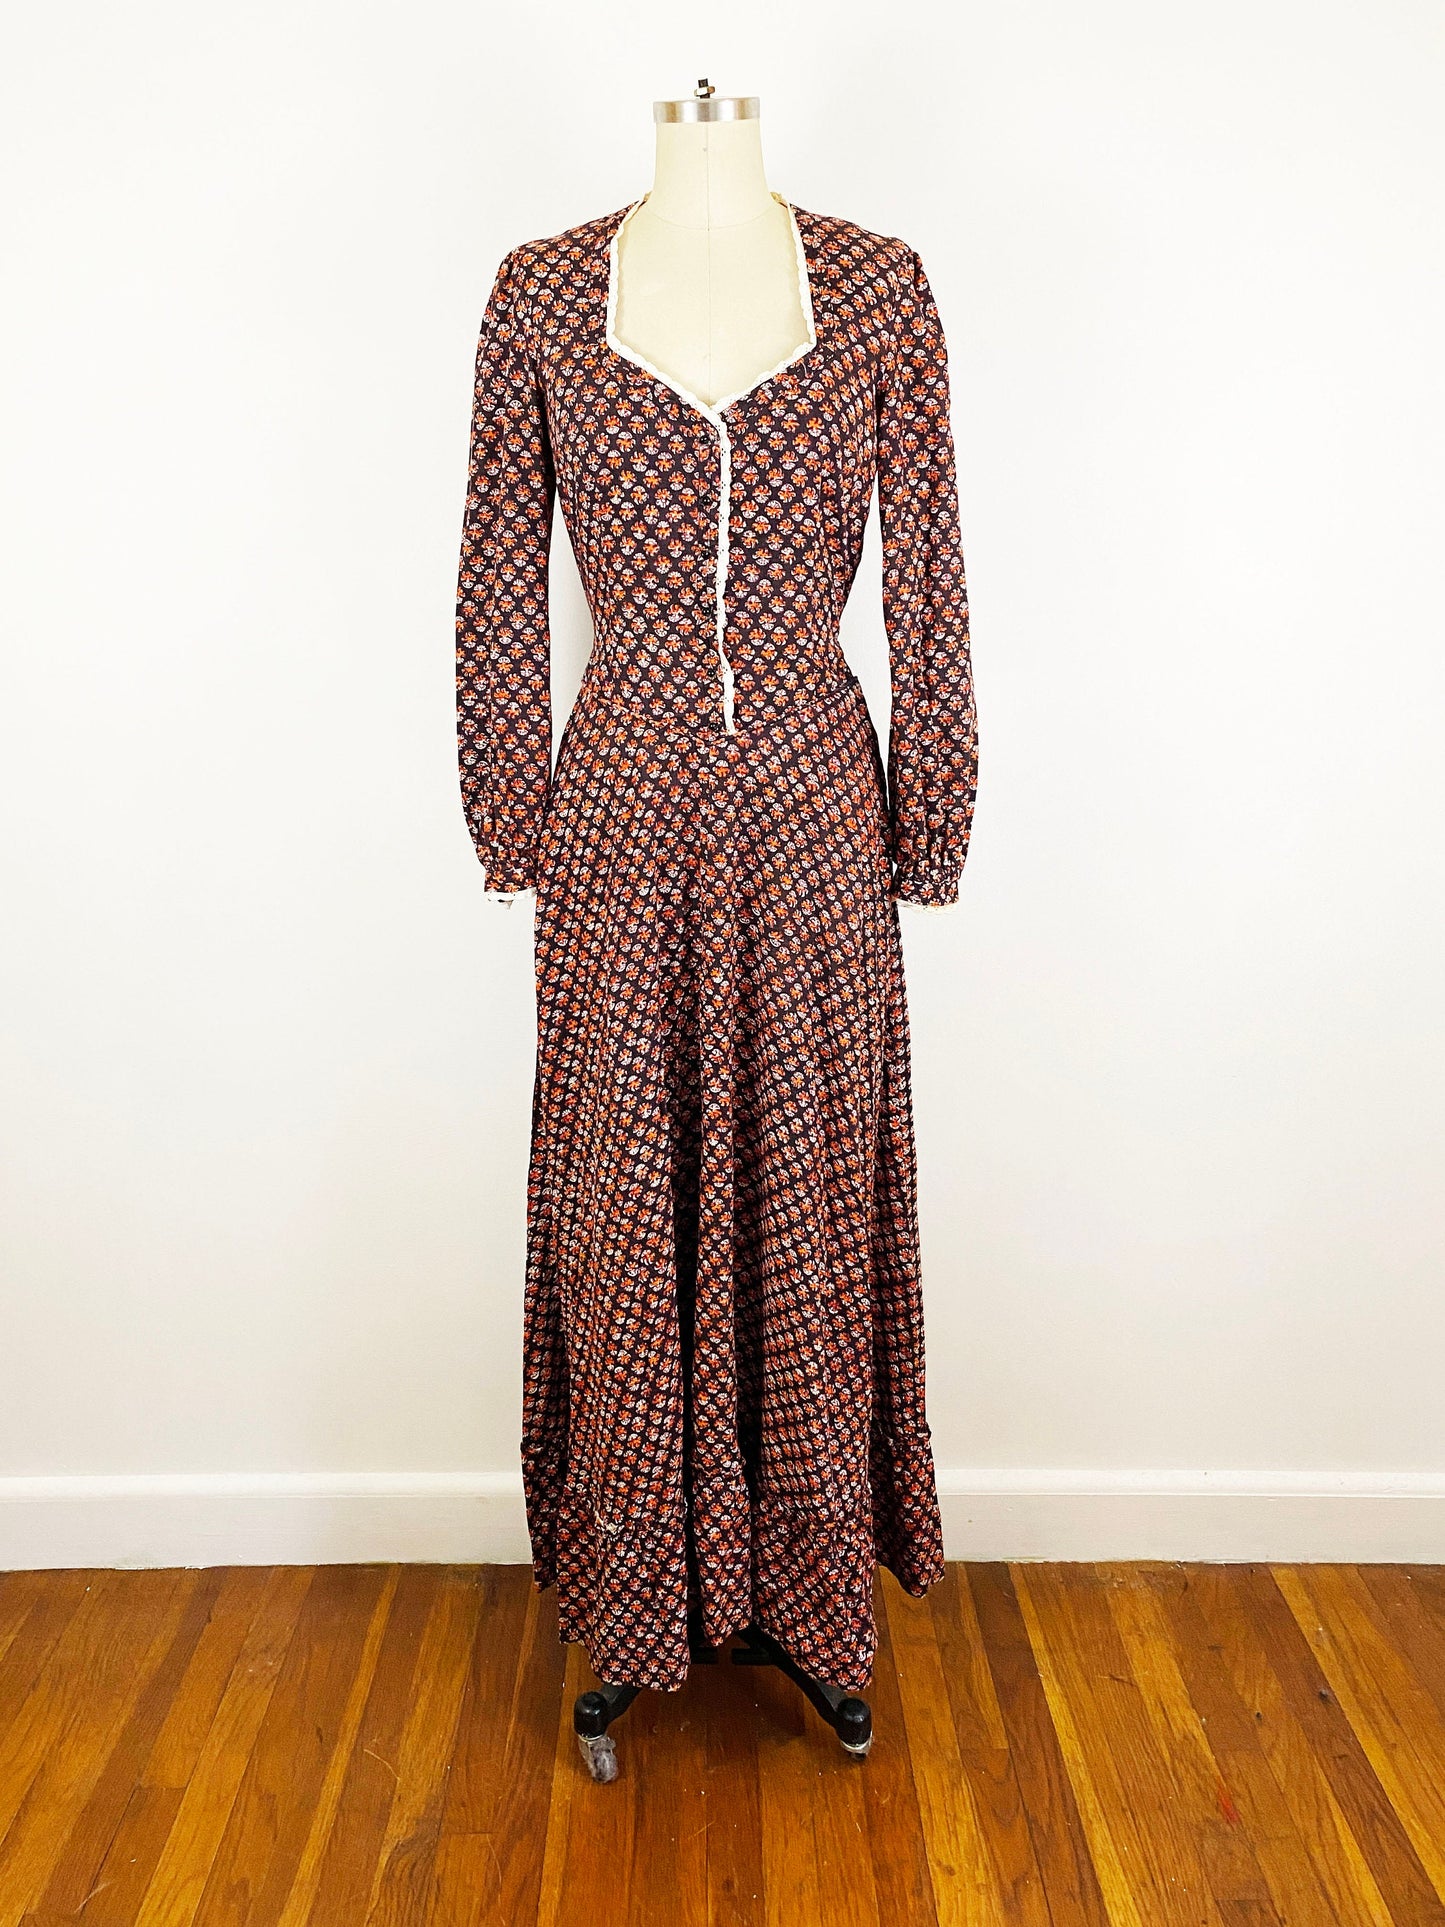 1970s India Imports Cotton Prairie Maxi Dress Block Print Hippie Romantic Peasant Boho Prairie Dress Black Orange / Size Medium 8